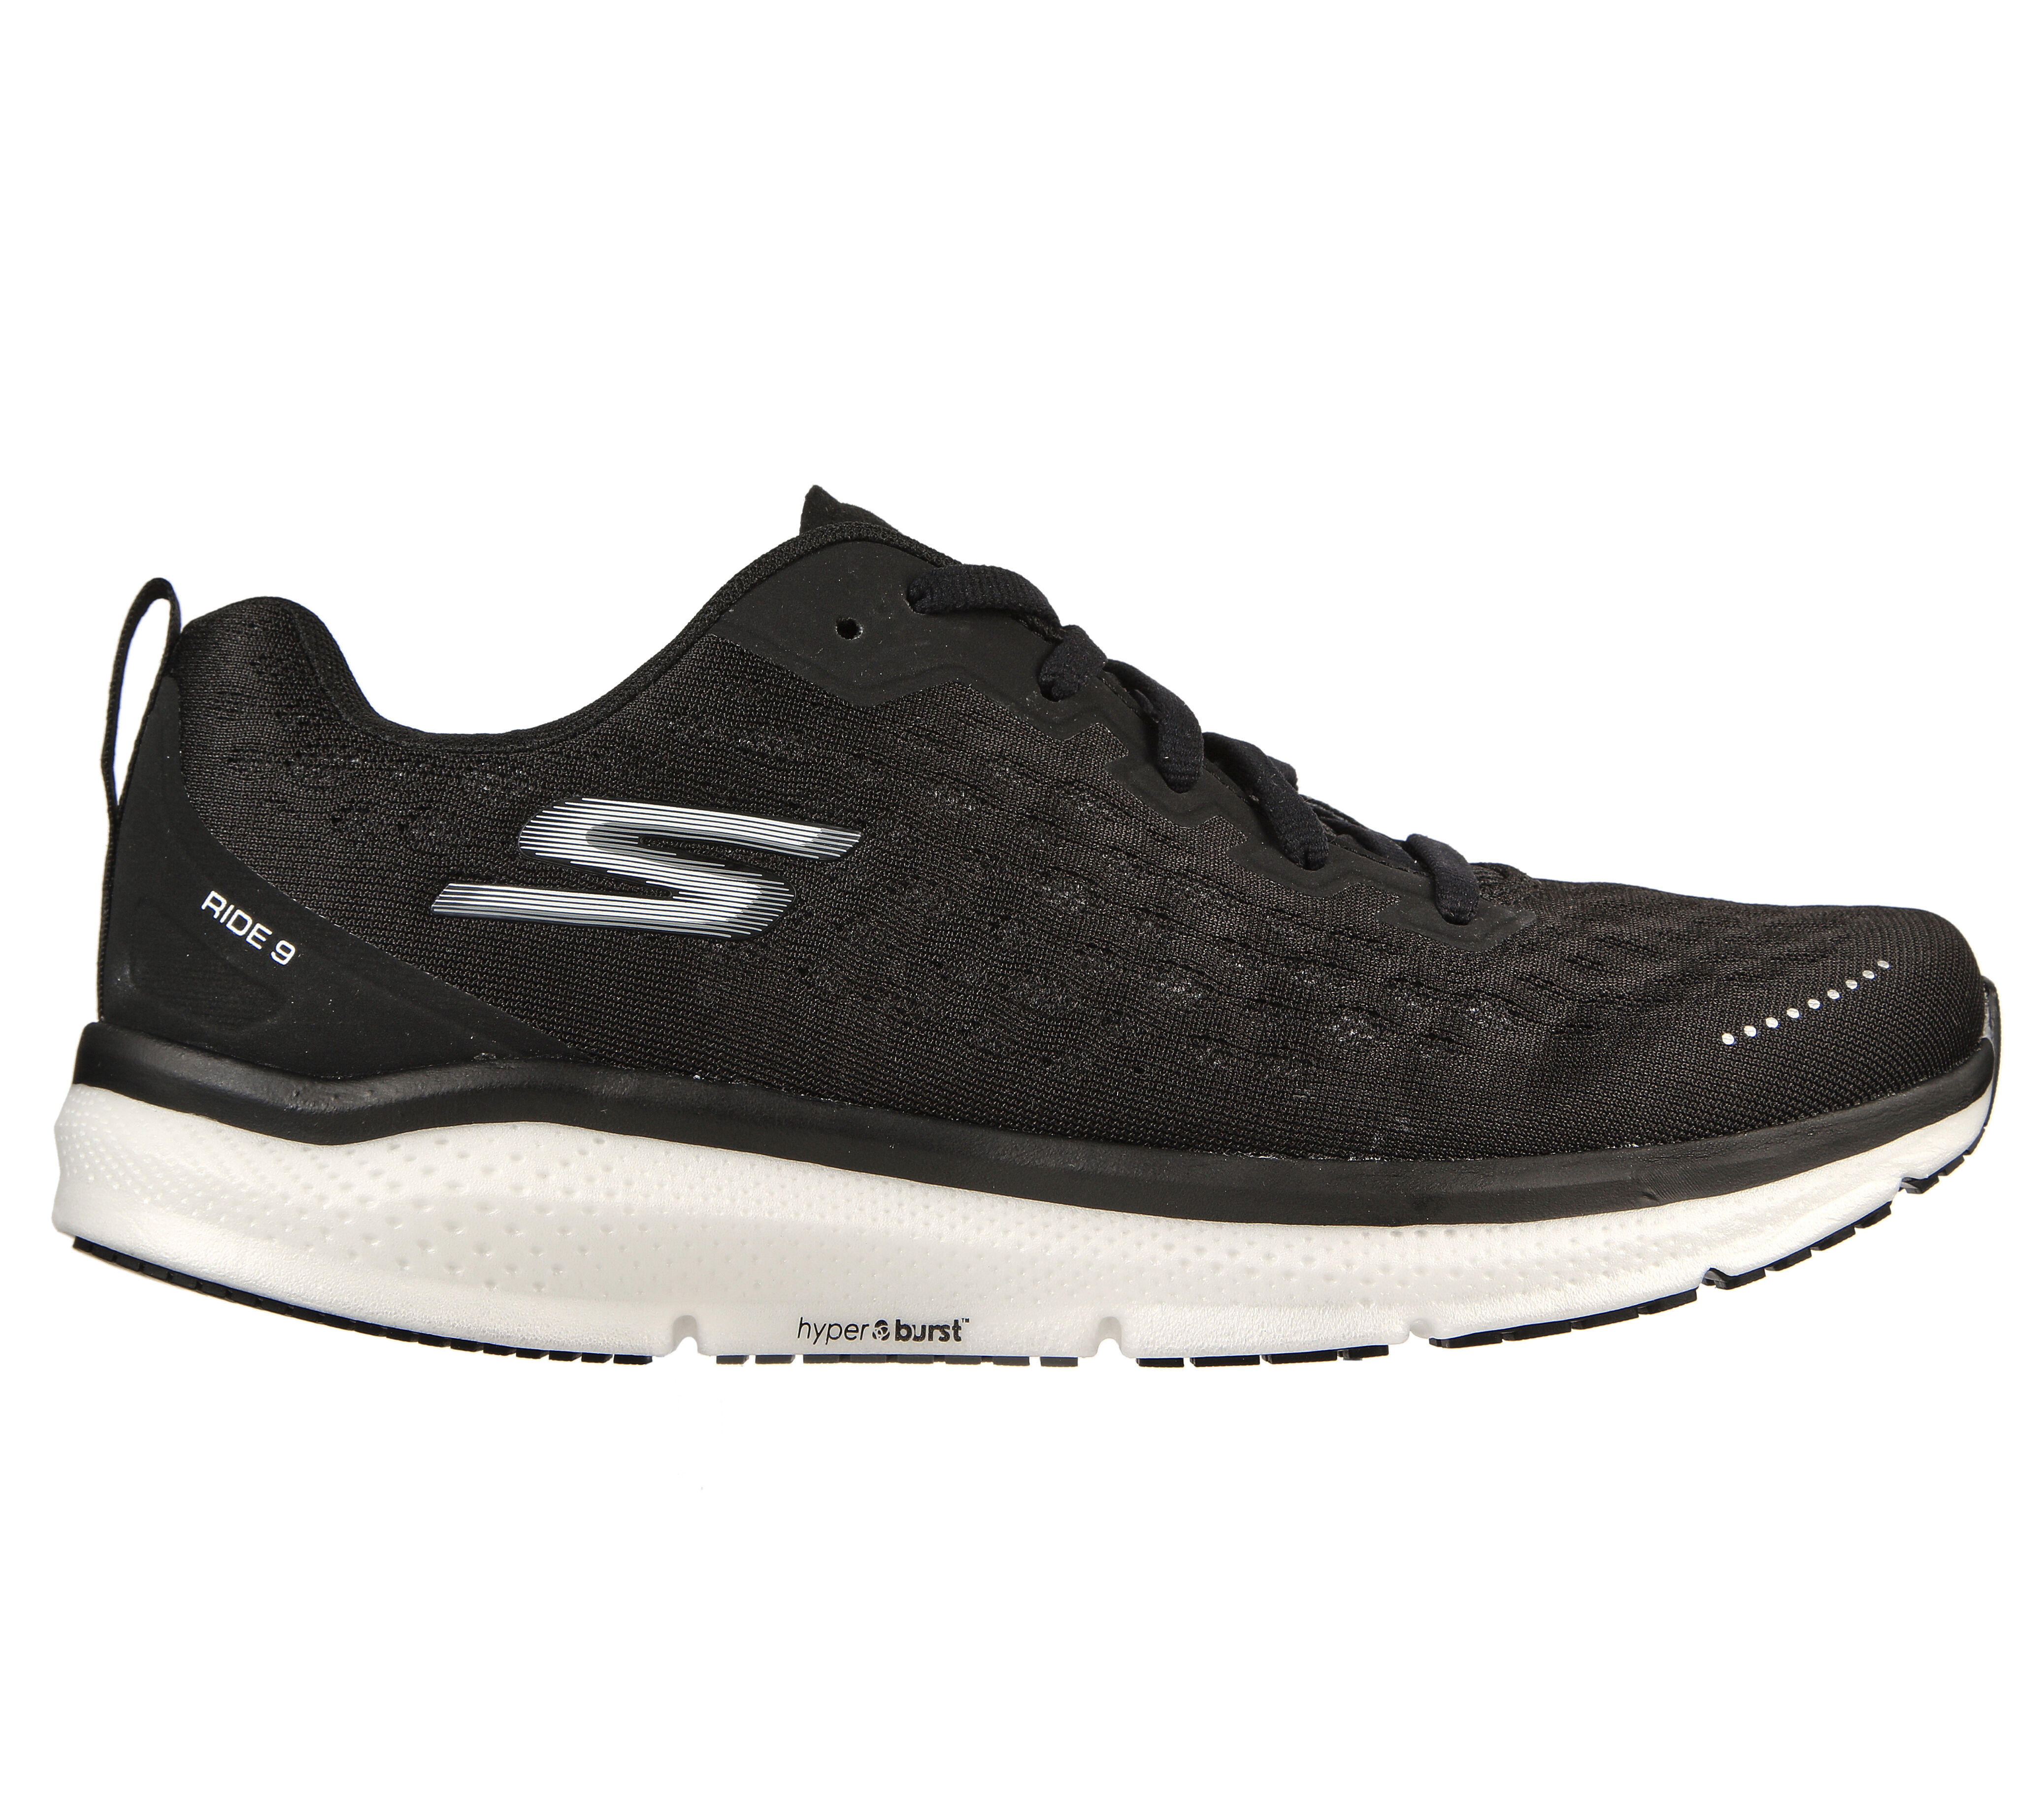 Skechers Men's GOrun Ride 9 Running Shoes, Black/White, 10.5